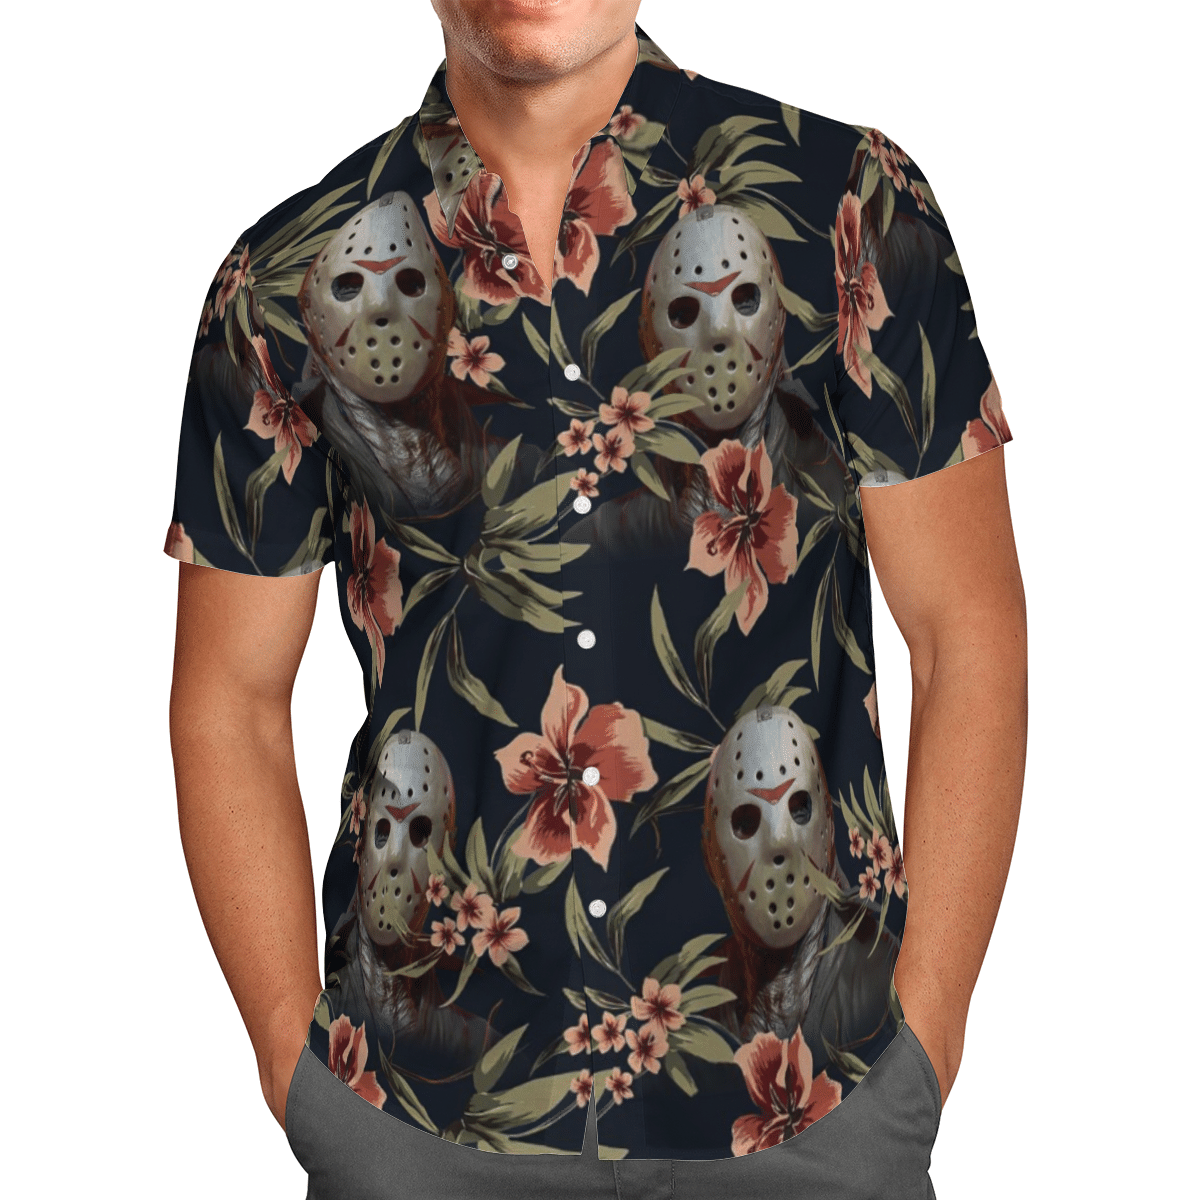 Jason Voorhees Hawaii shirt and short 1